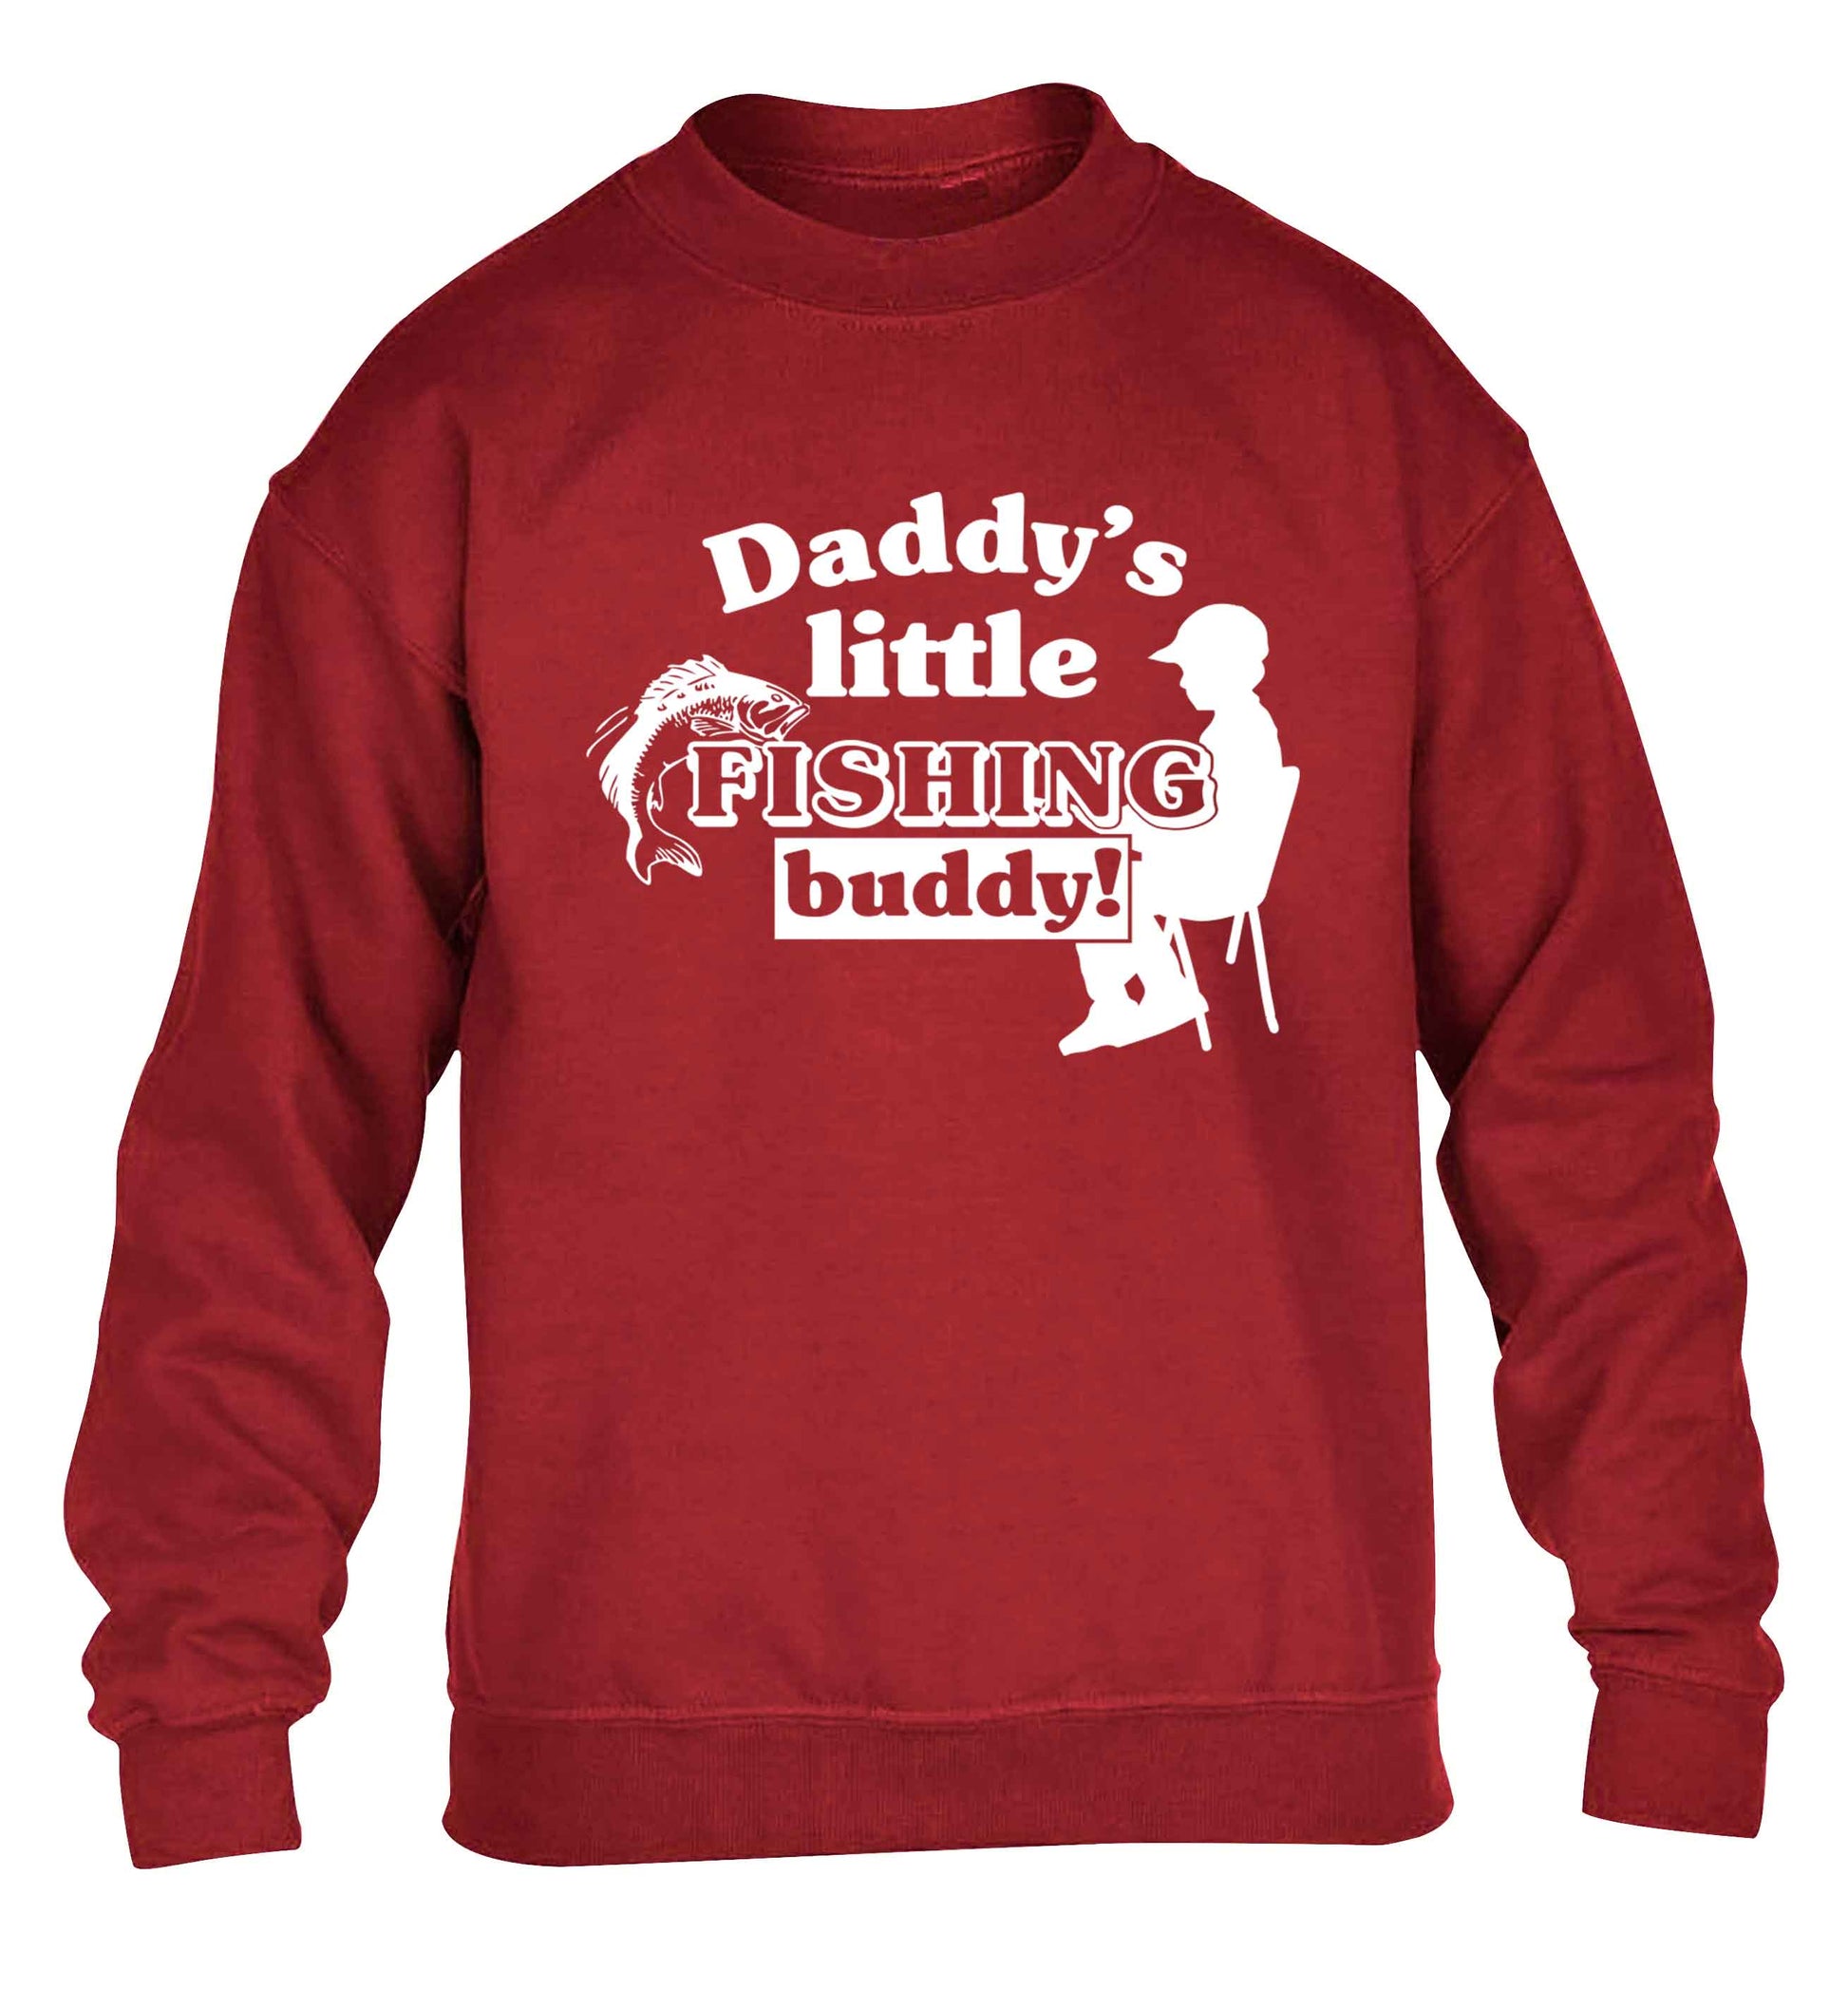 Daddy's little fishing buddy children's grey sweater 12-13 Years